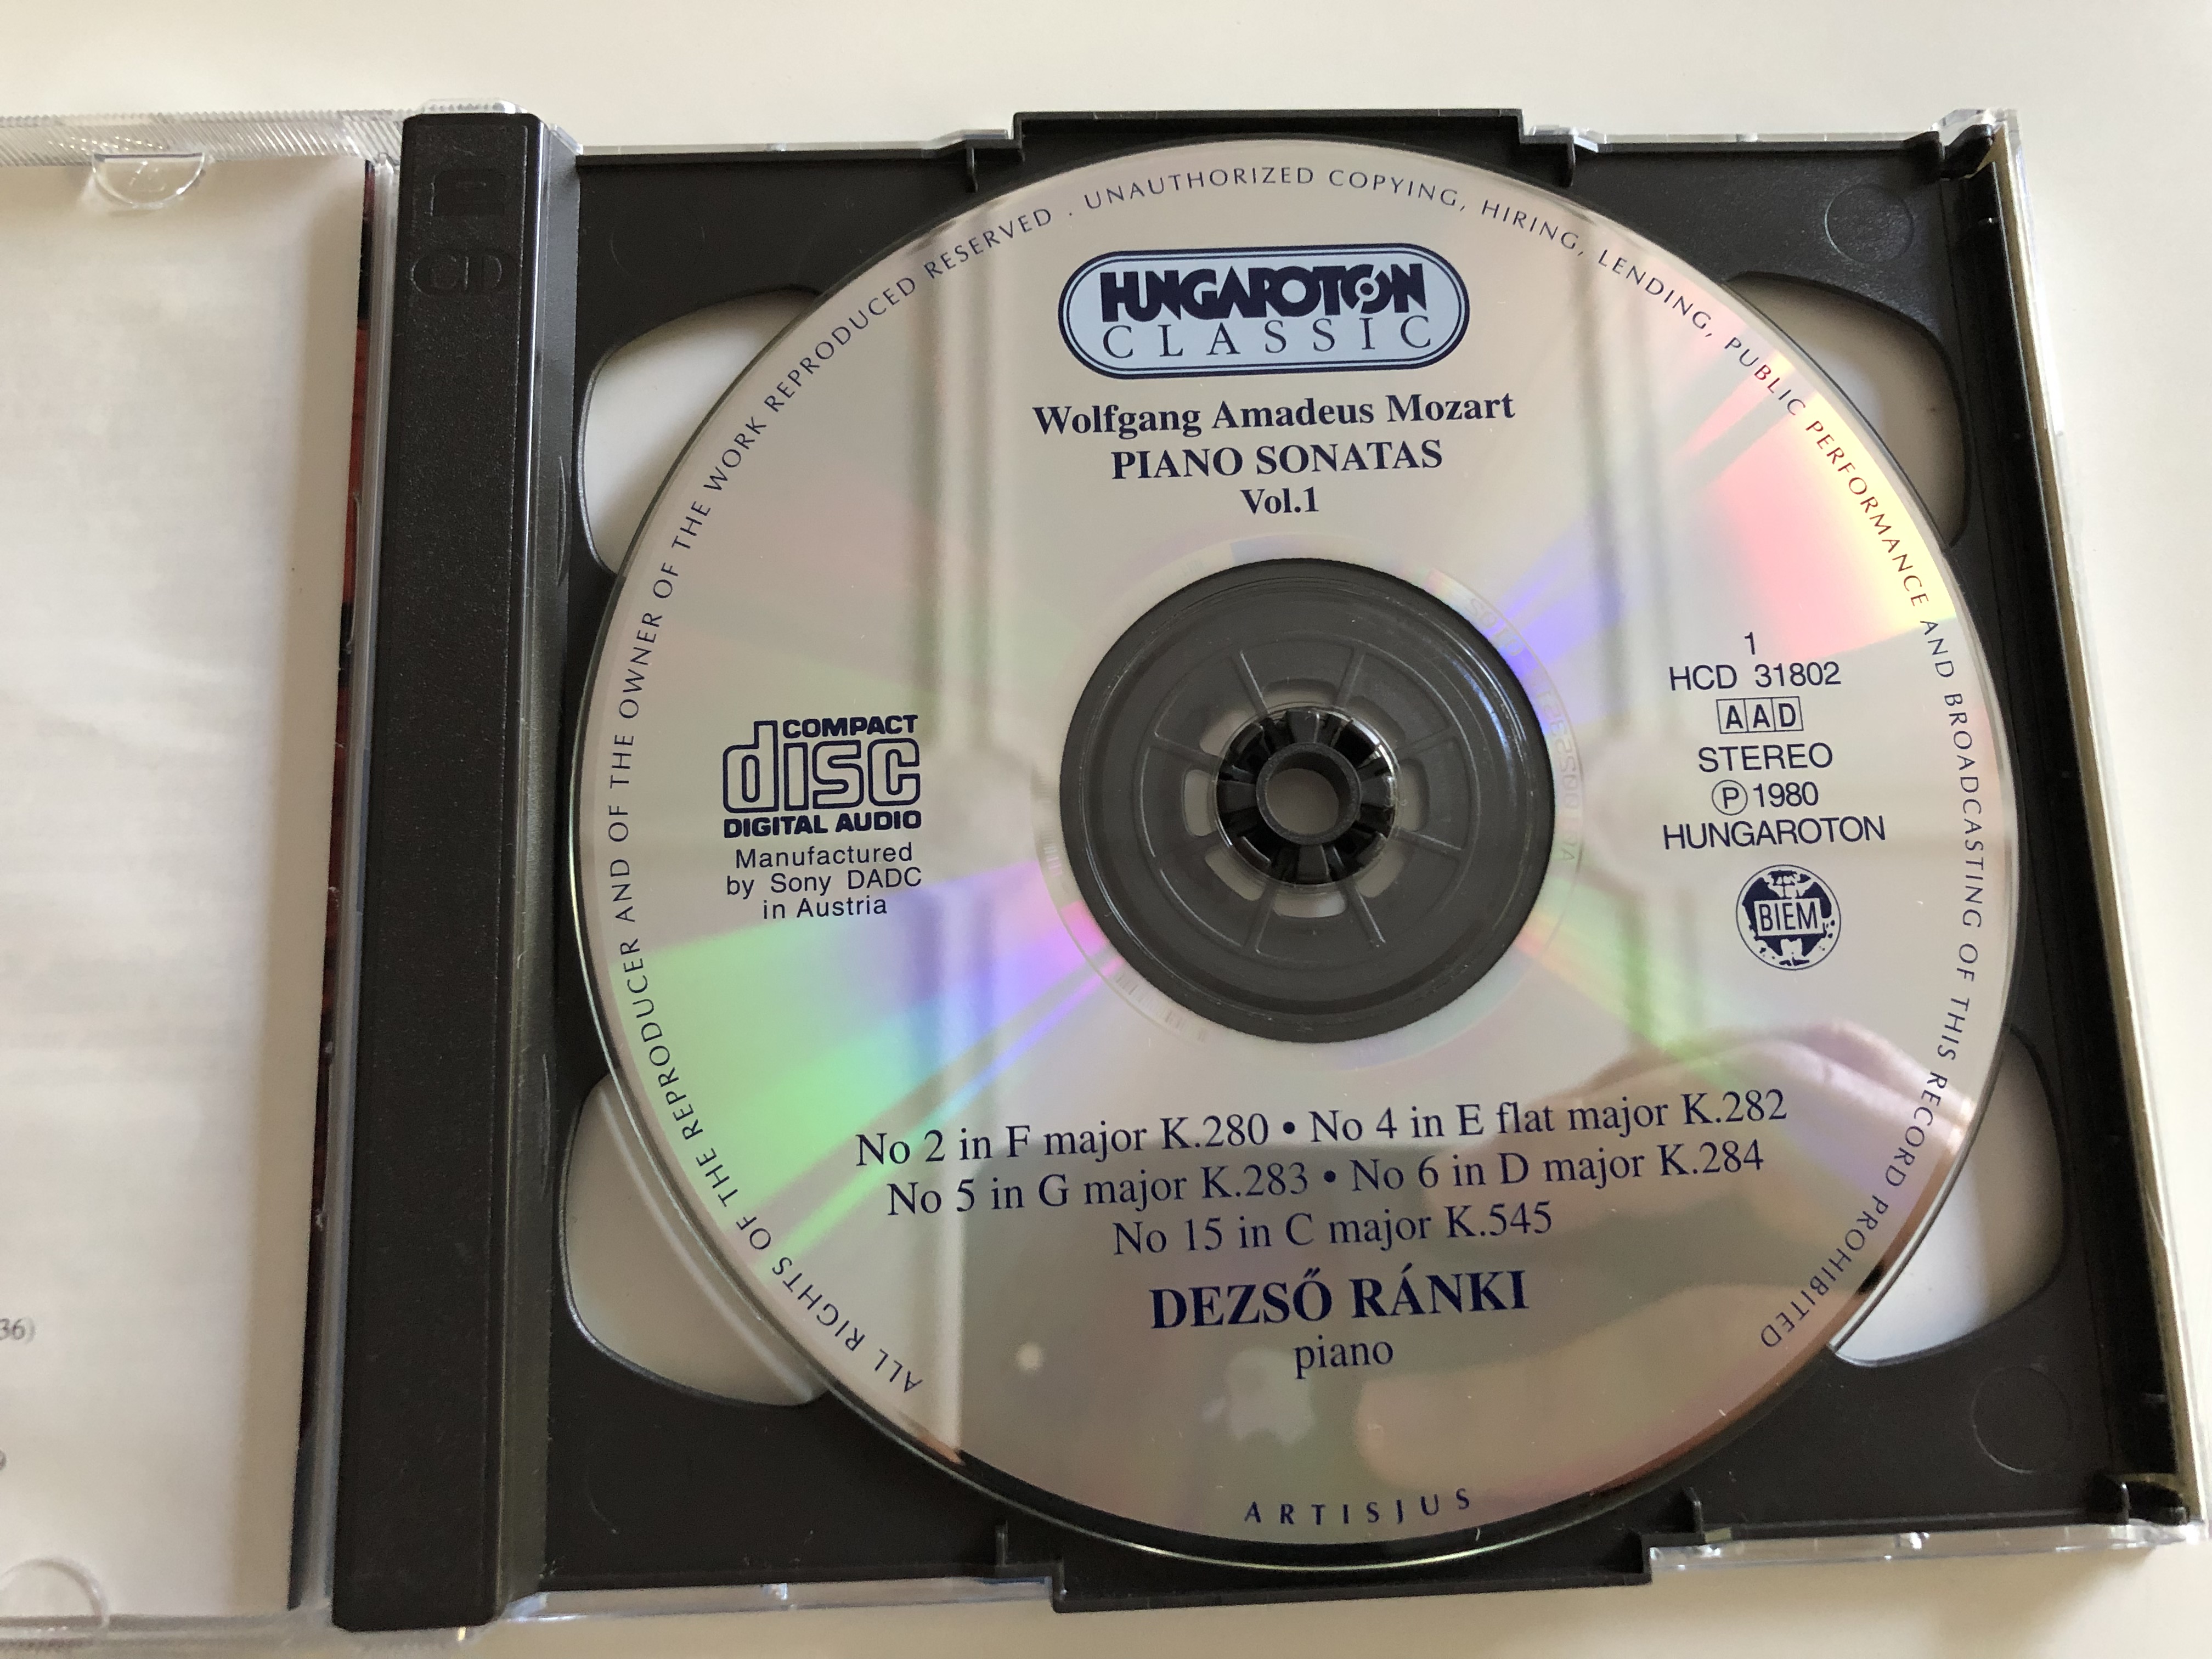 mozart-piano-sonatas-volume-1-dezs-r-nki-piano-hungaroton-classic-audio-cd-1998-hcd-31802-03-2-cd-8-.jpg